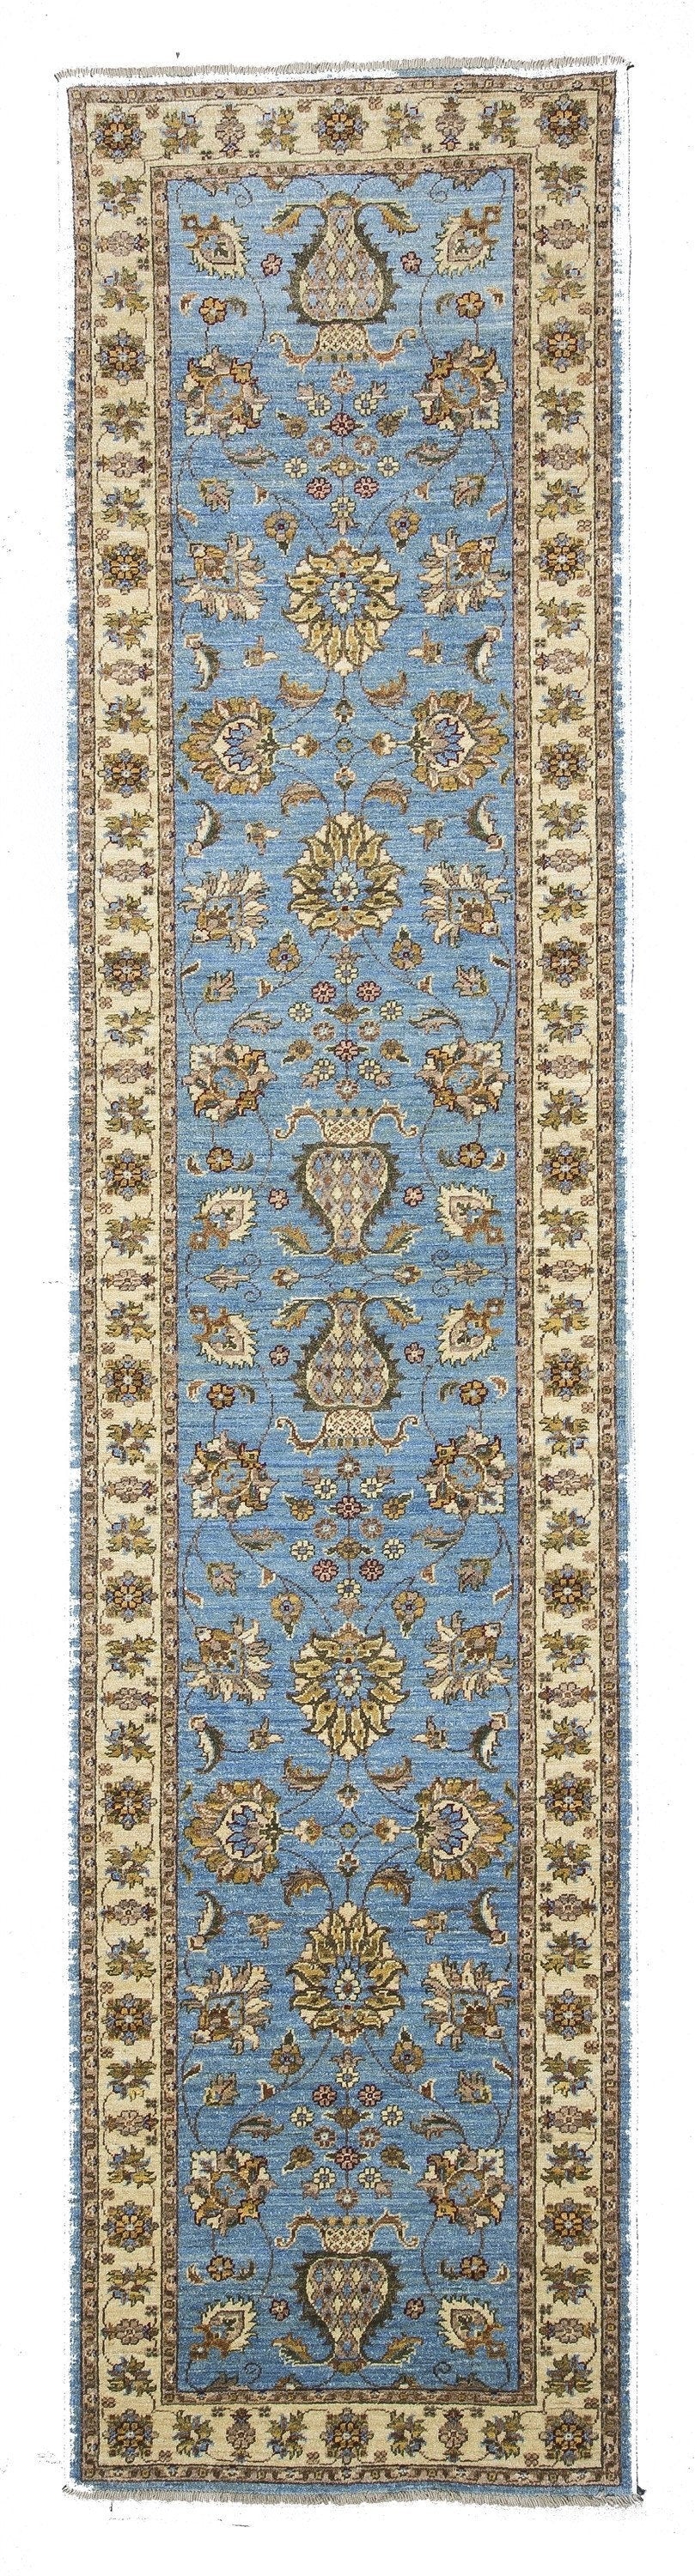 Turkish Usak Hallway Runner Rug 11 x 3 ft Blue Beige Long Rug, Vintage Oriental Ottoman Palace Rug, Handmade Natural Wool Persian Area Rug